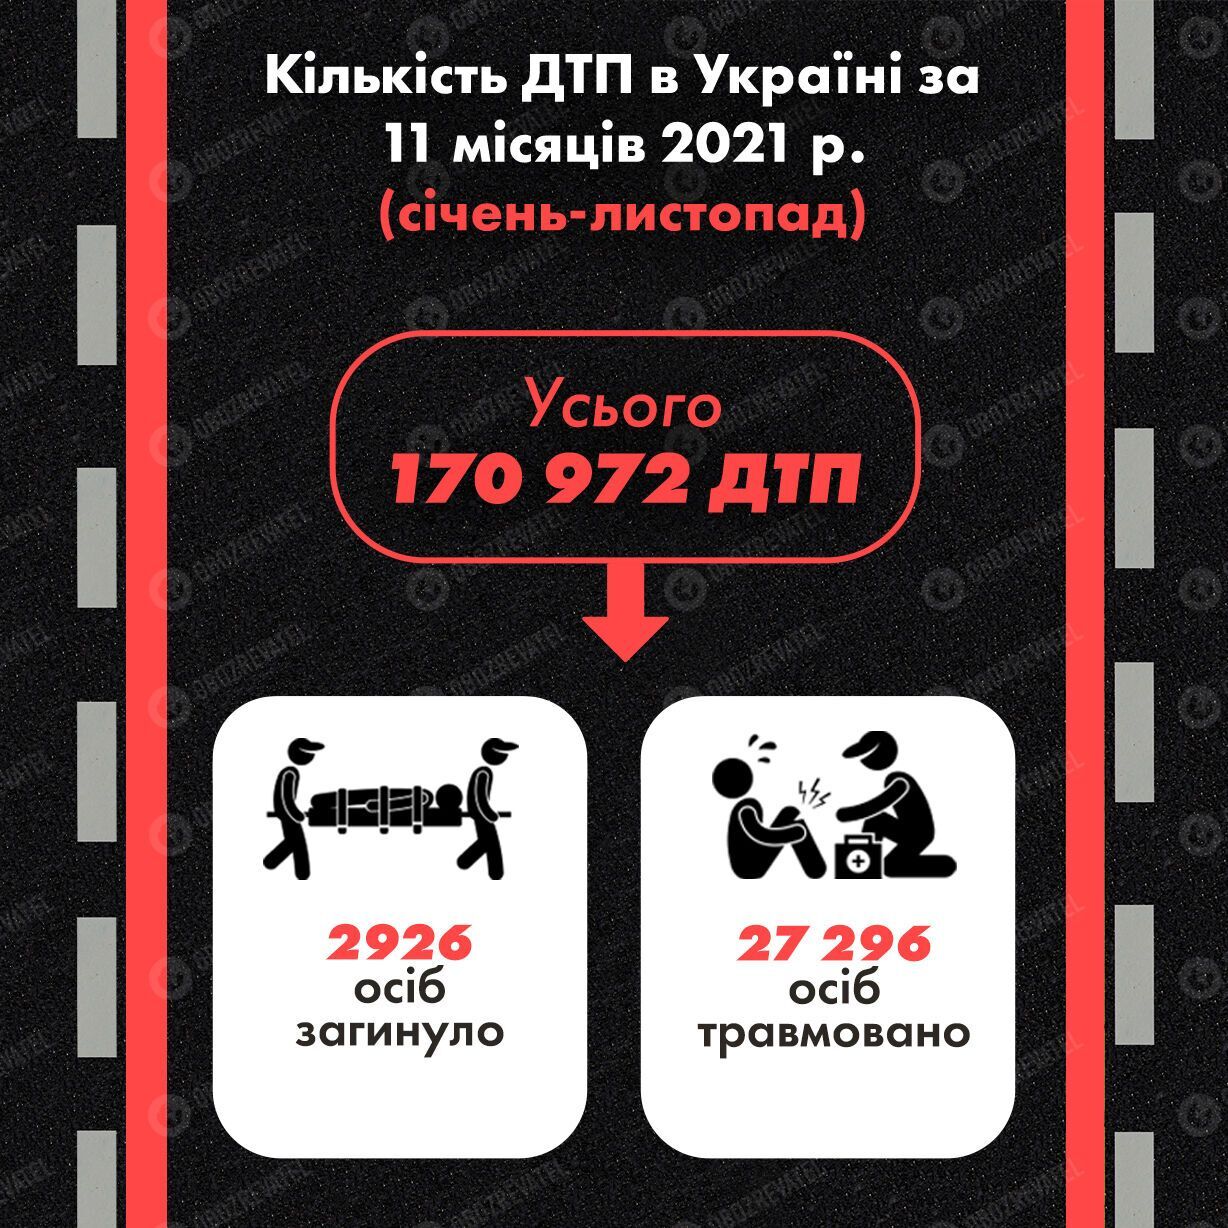 Статистика по авариям на дорогах Украины